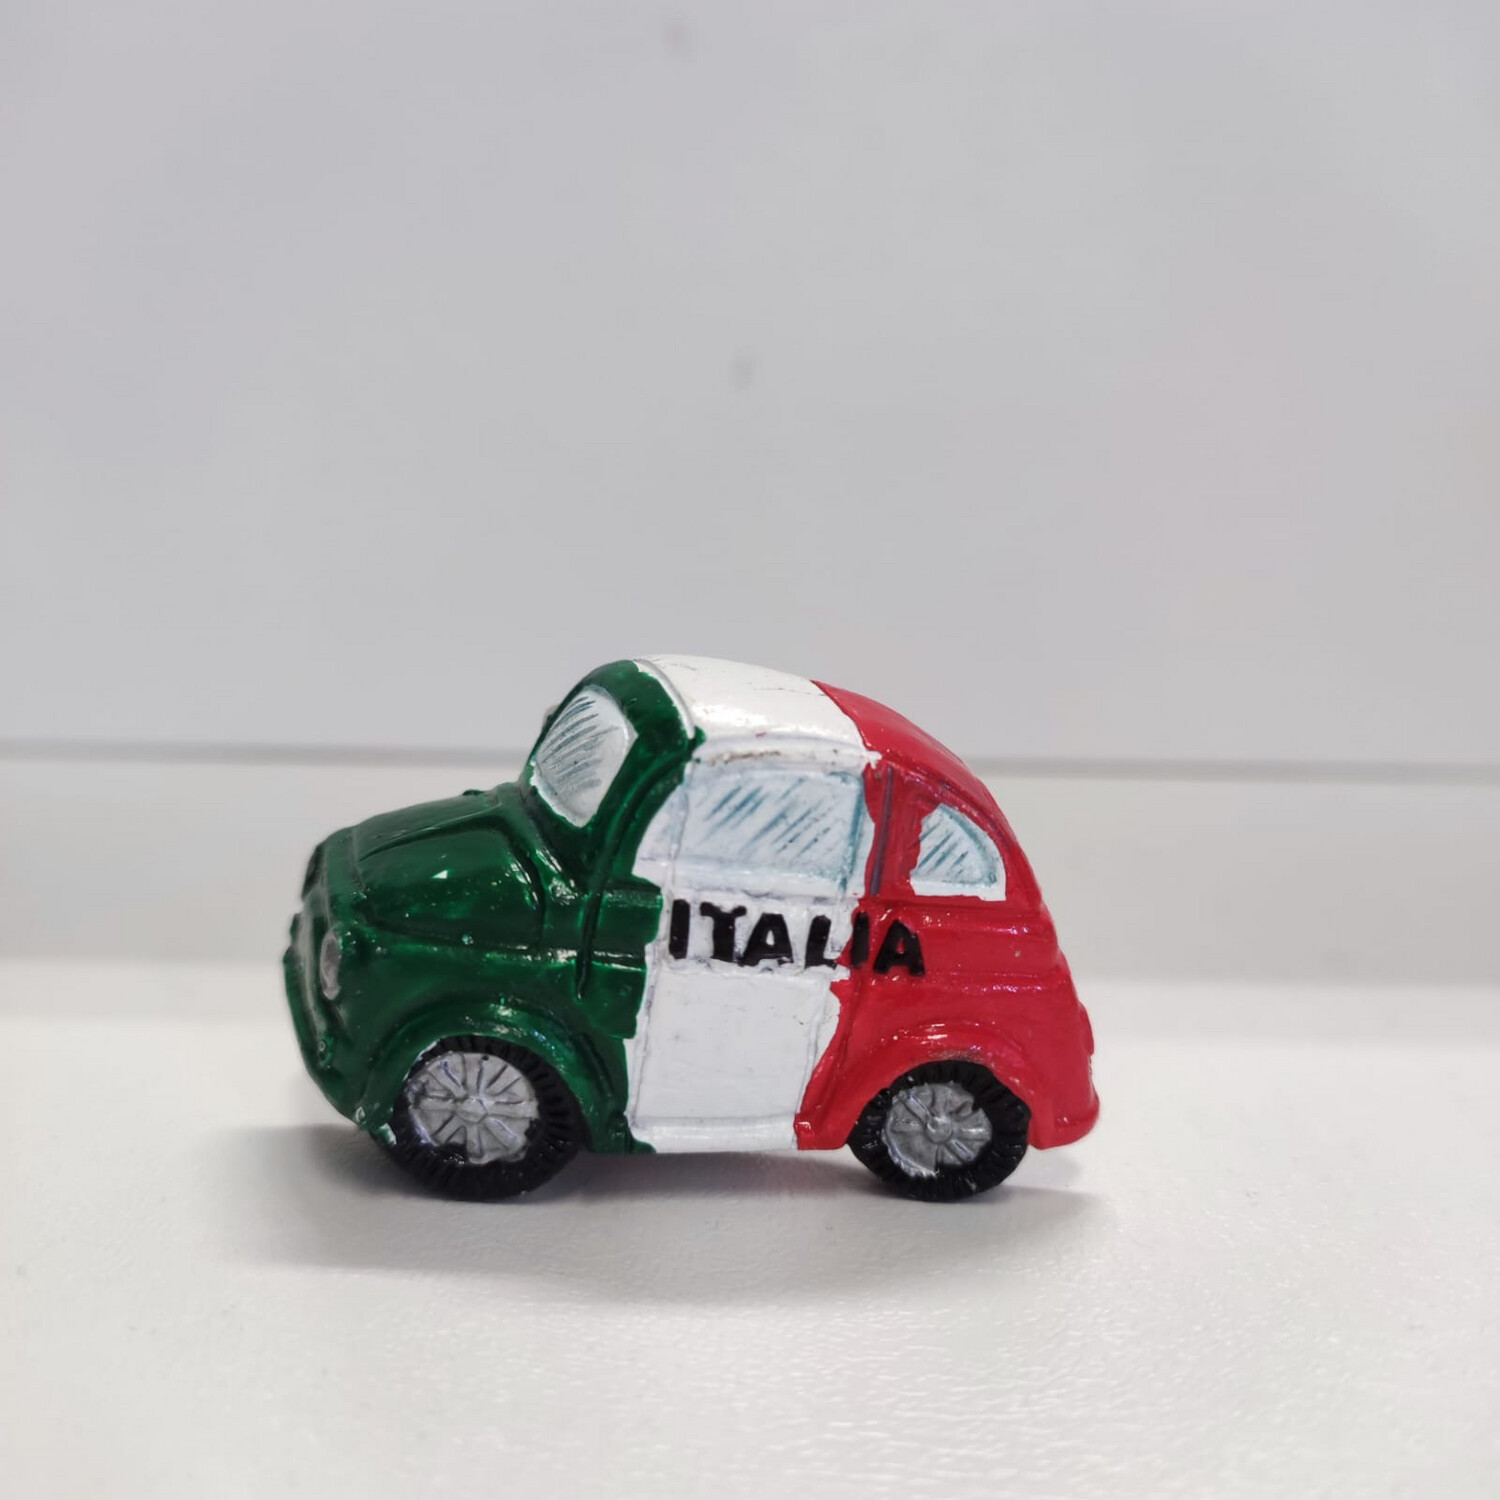 Magnete resina ITA 500 Tricolore